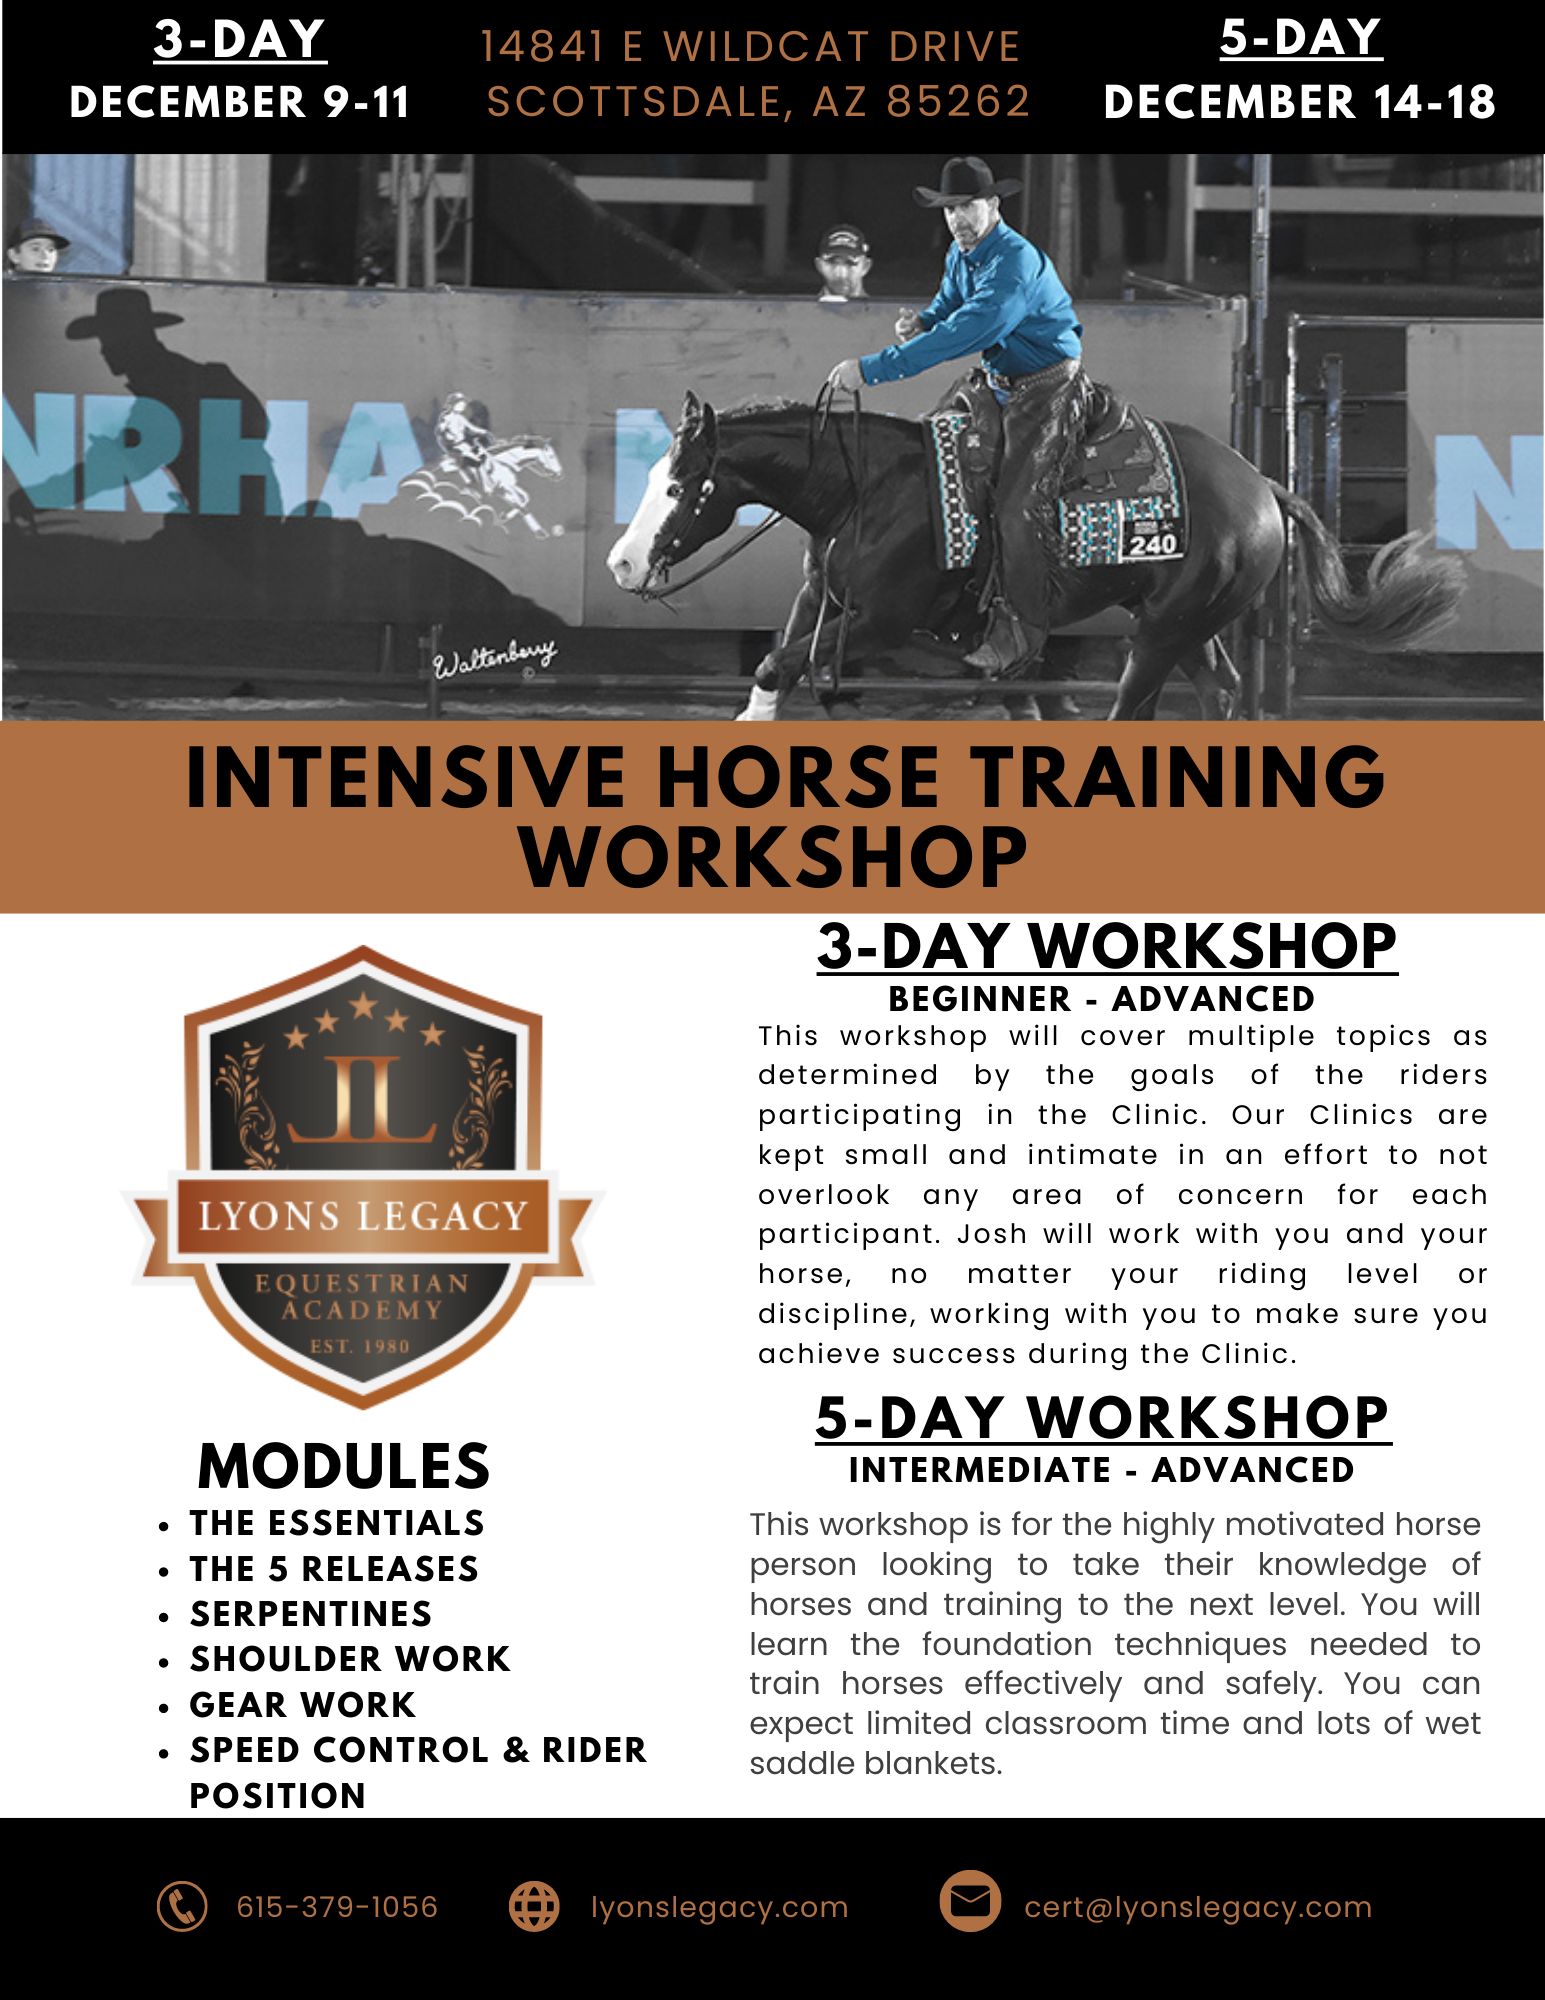 Intensive Horse Training Workshops in Scottsdale, AZ!